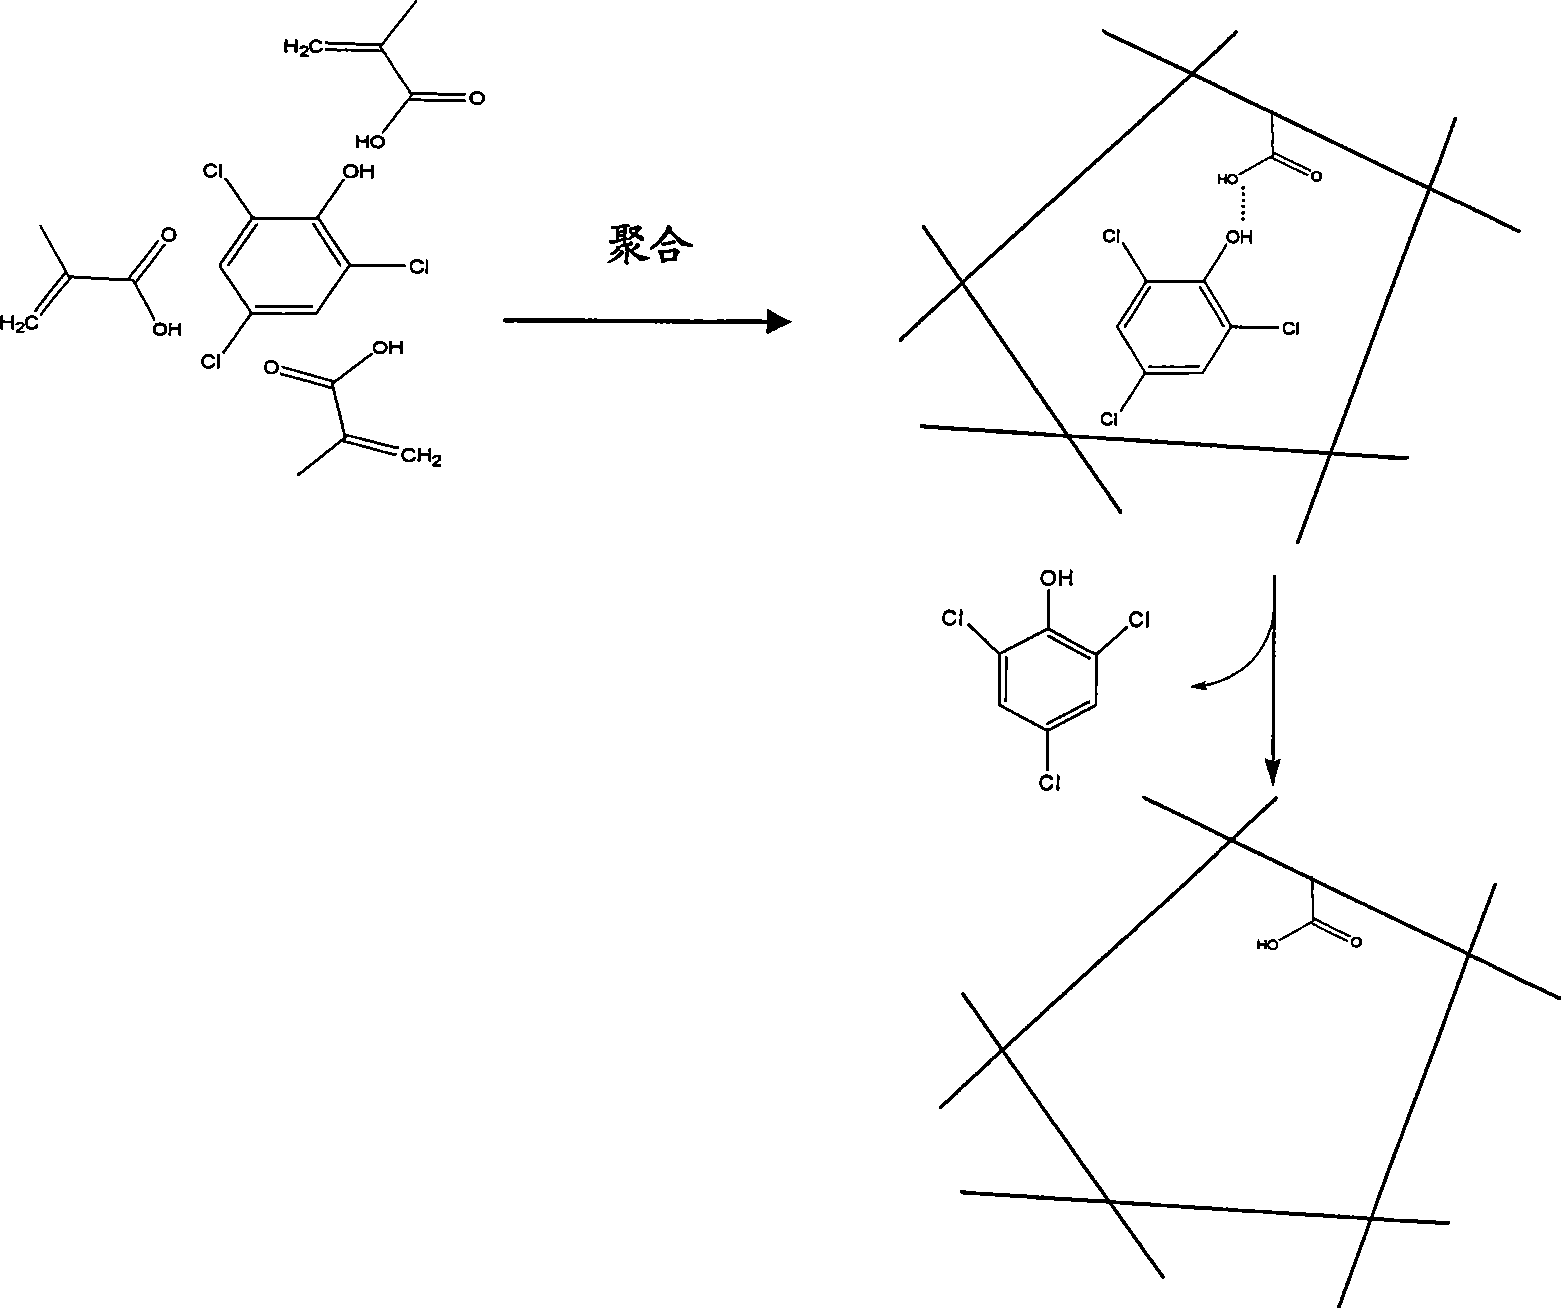 2,4,6-trichlorophenol molecular imprinting microsphere polymer